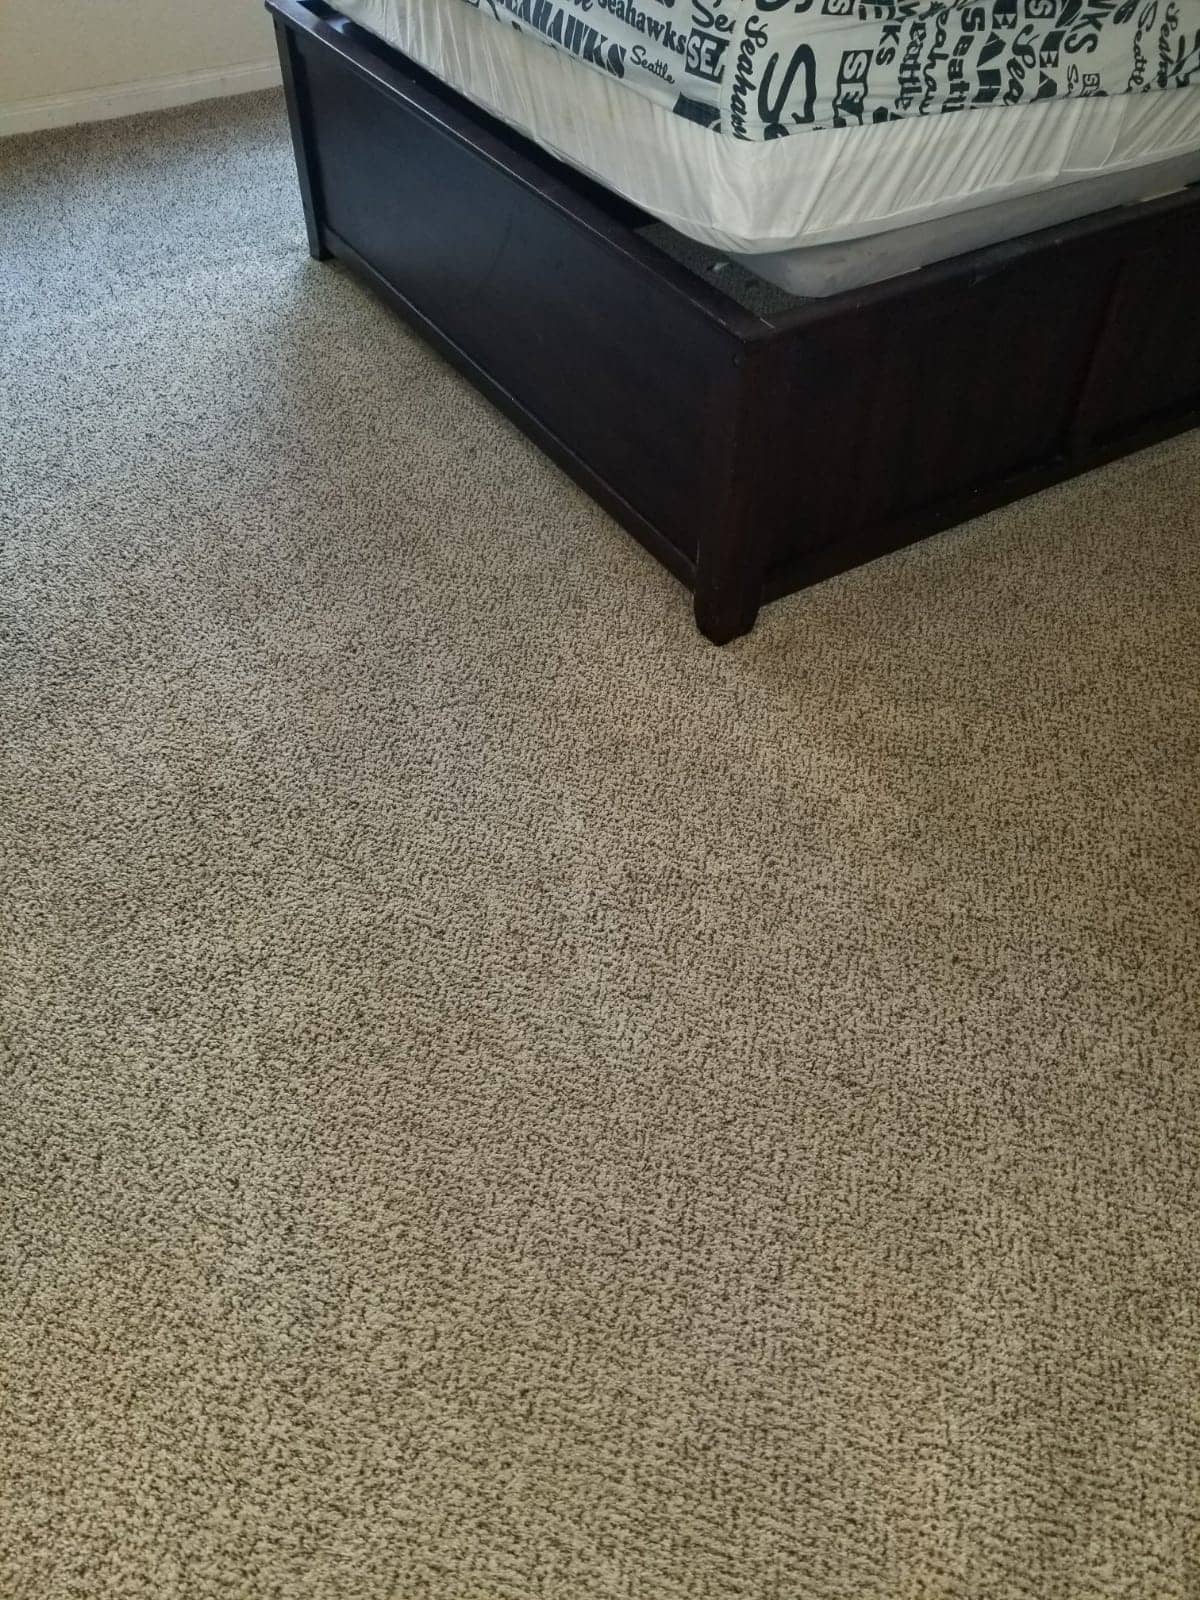 aftr bedroom carpet cleaning